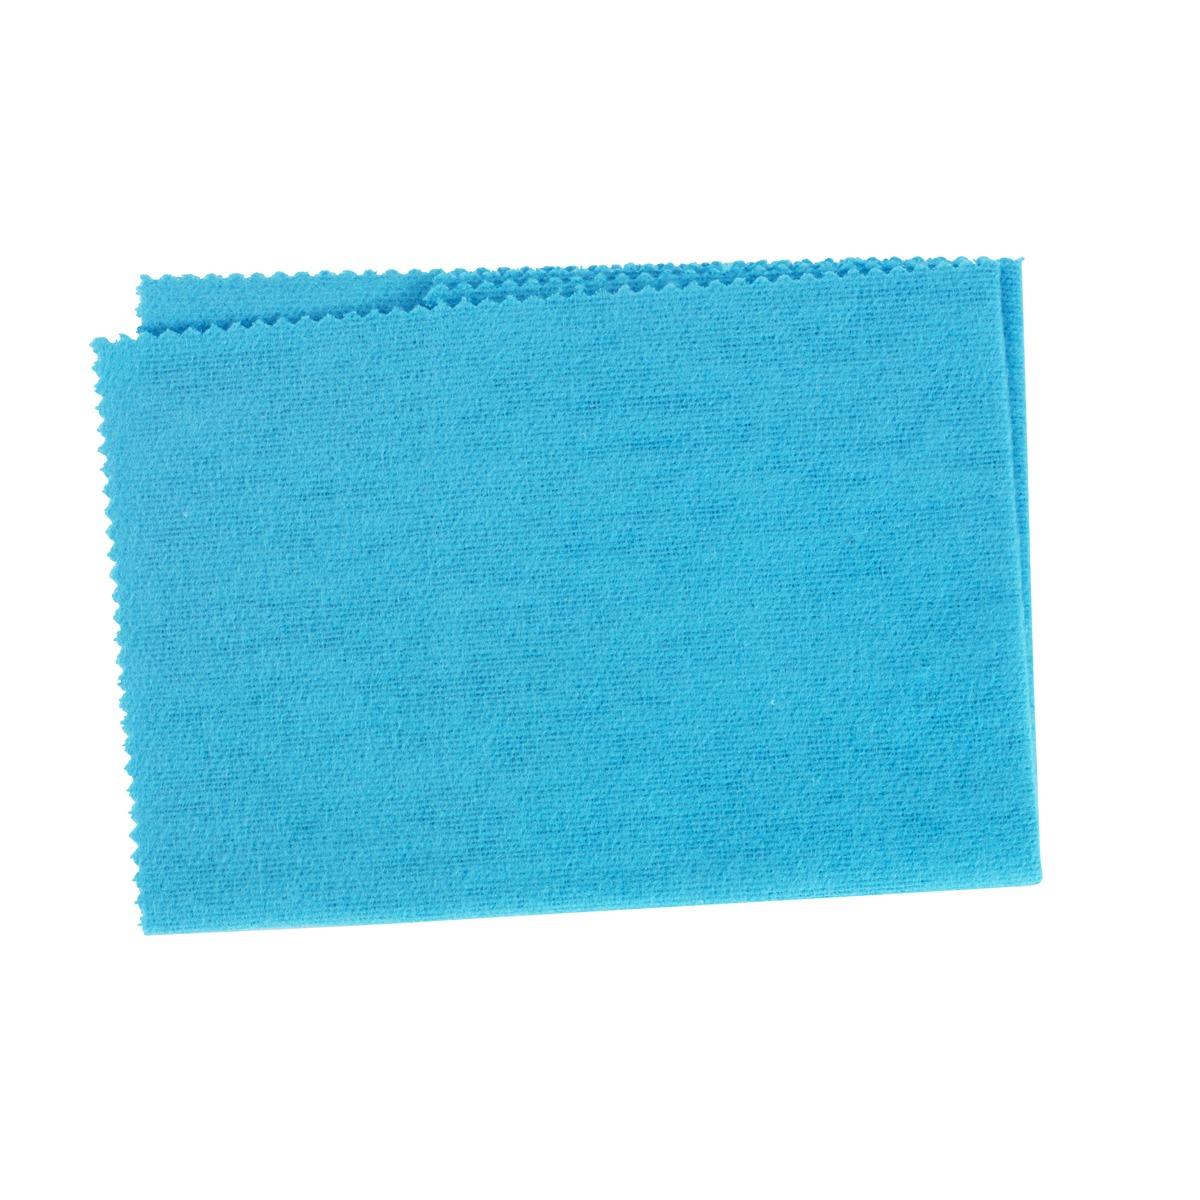 Chiffon antibuée pour voiture - 19 x 12 cm - Bleu